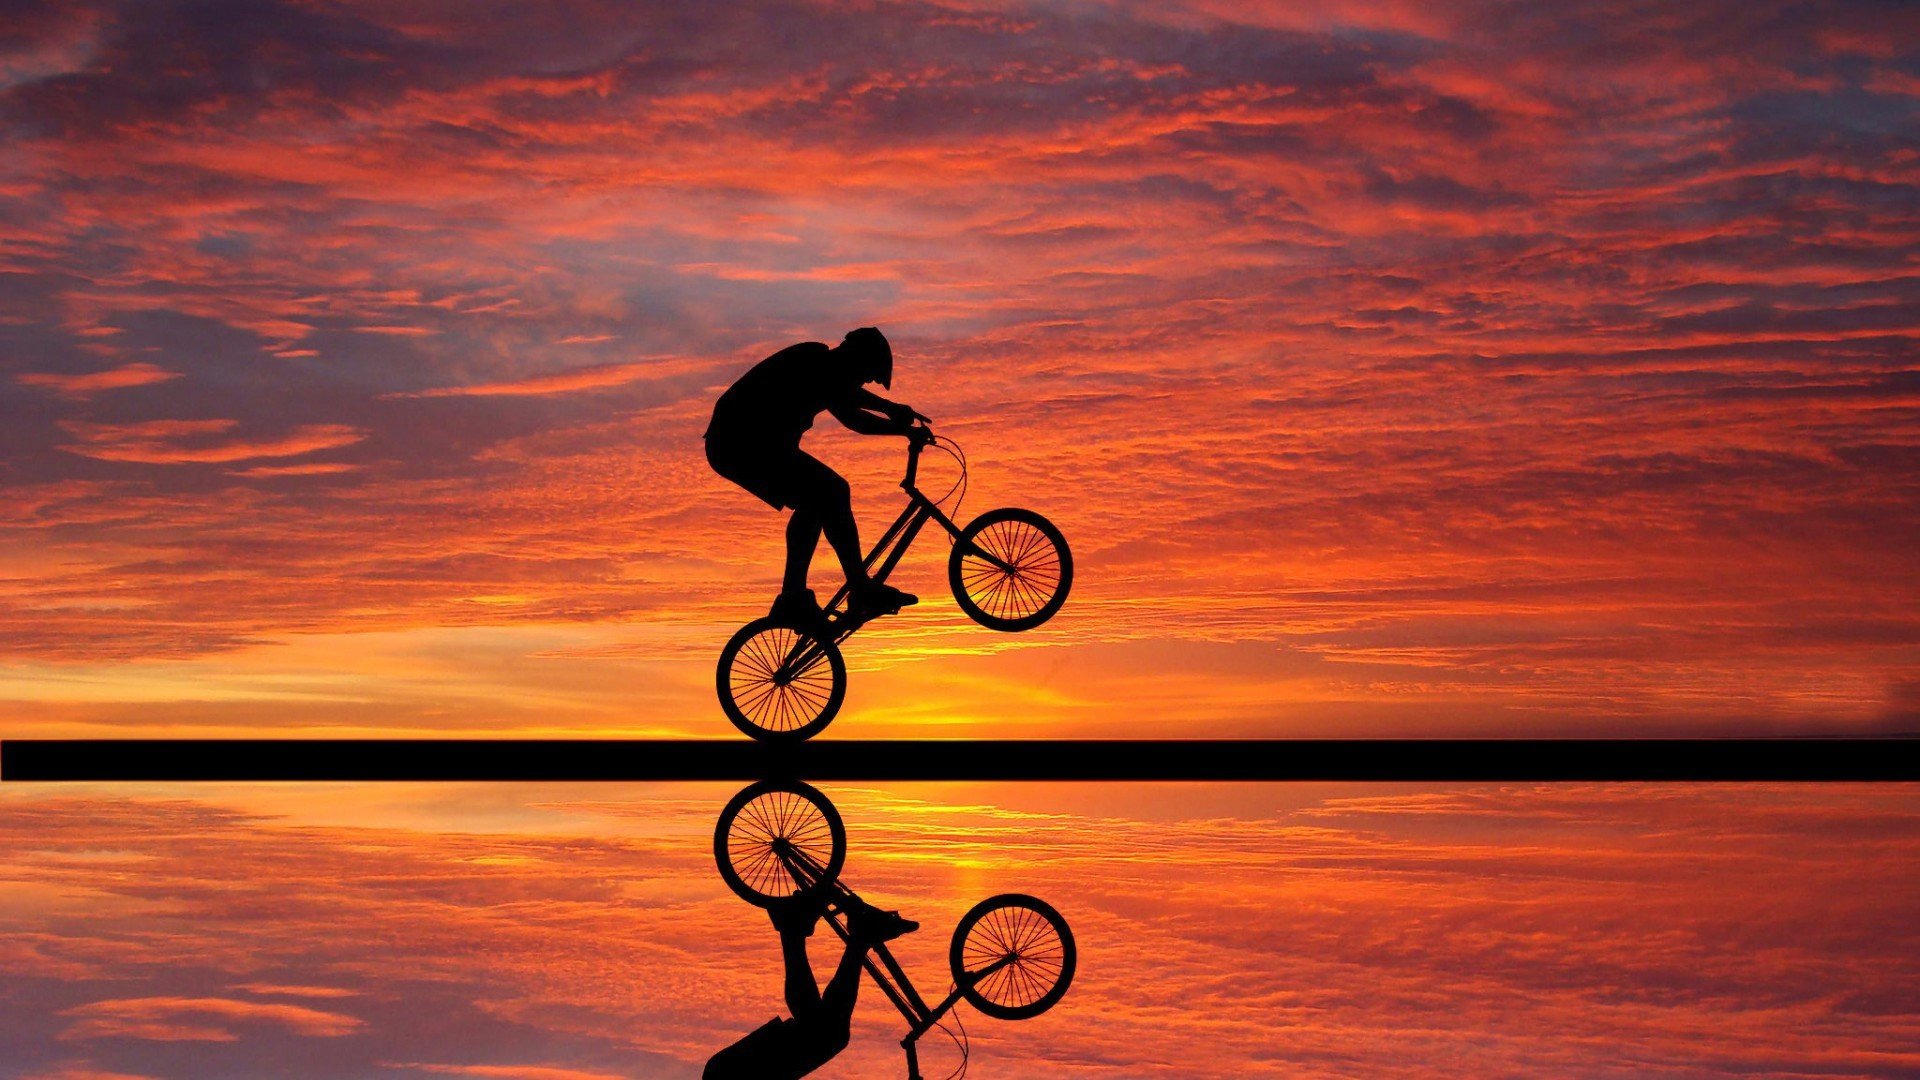 Wallpaper  sunlight sunset nature bicycle vehicle evening morning  cycling Downhill mountain biking sports equipment mountain bike extreme  sport freeride cycle sport mountain biking 2048x1310 px 2048x1310   4kWallpaper  638907  HD 